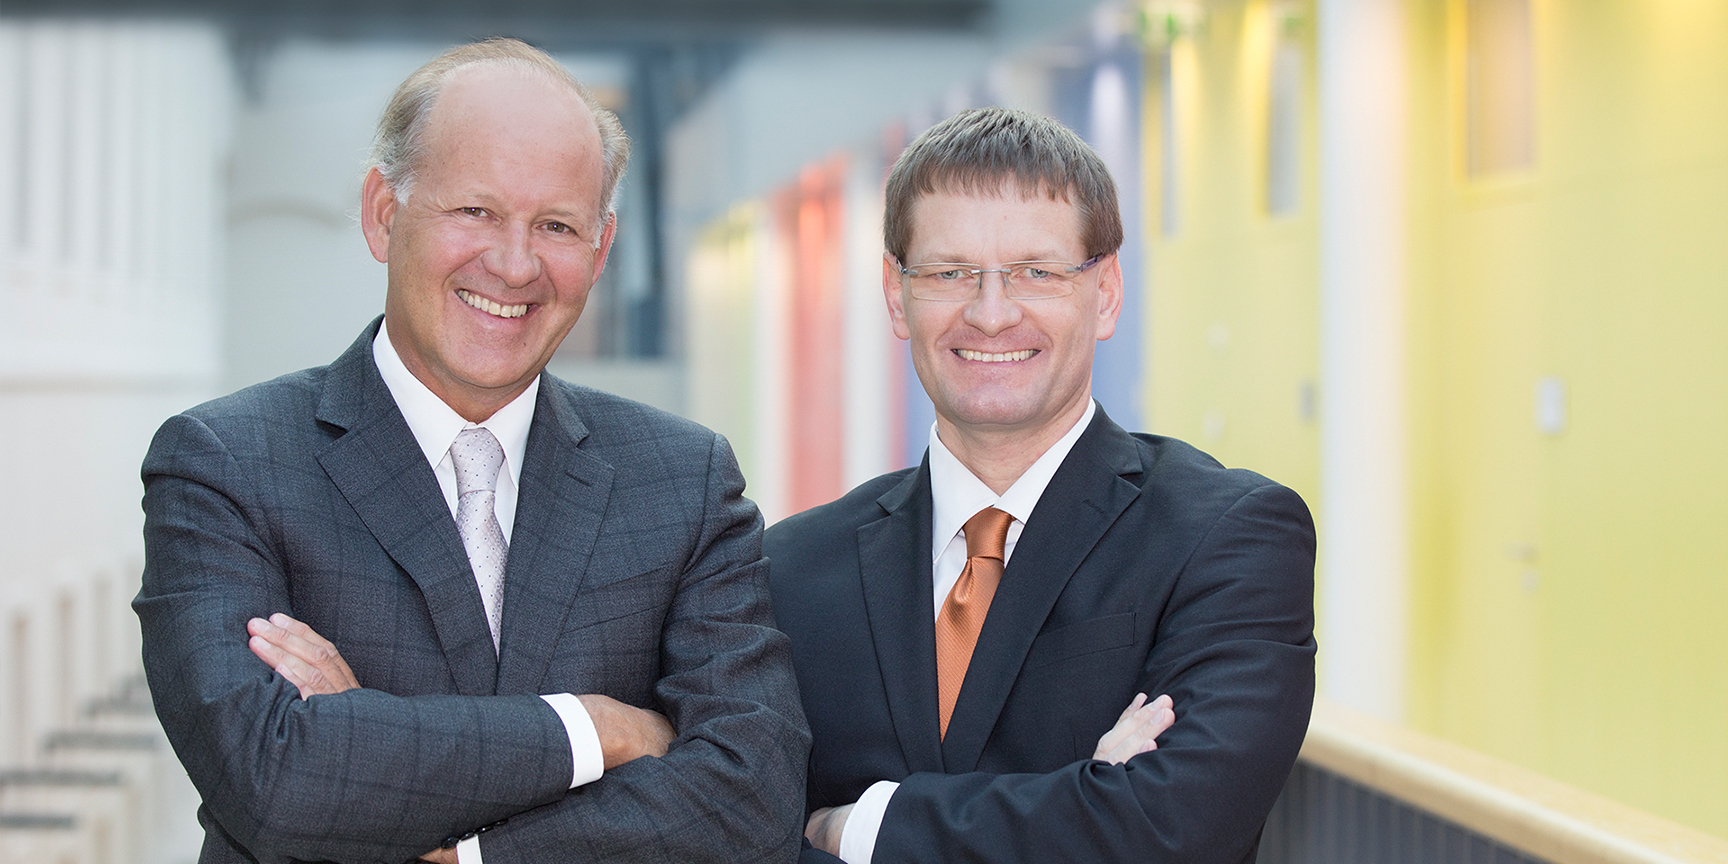 Univ.-Prof. DDr. Andreas Moritz (left) – Managing Director, Medical Director, Head of the Clinic Thomas Stock (right) – Managing Director, Commercial Director